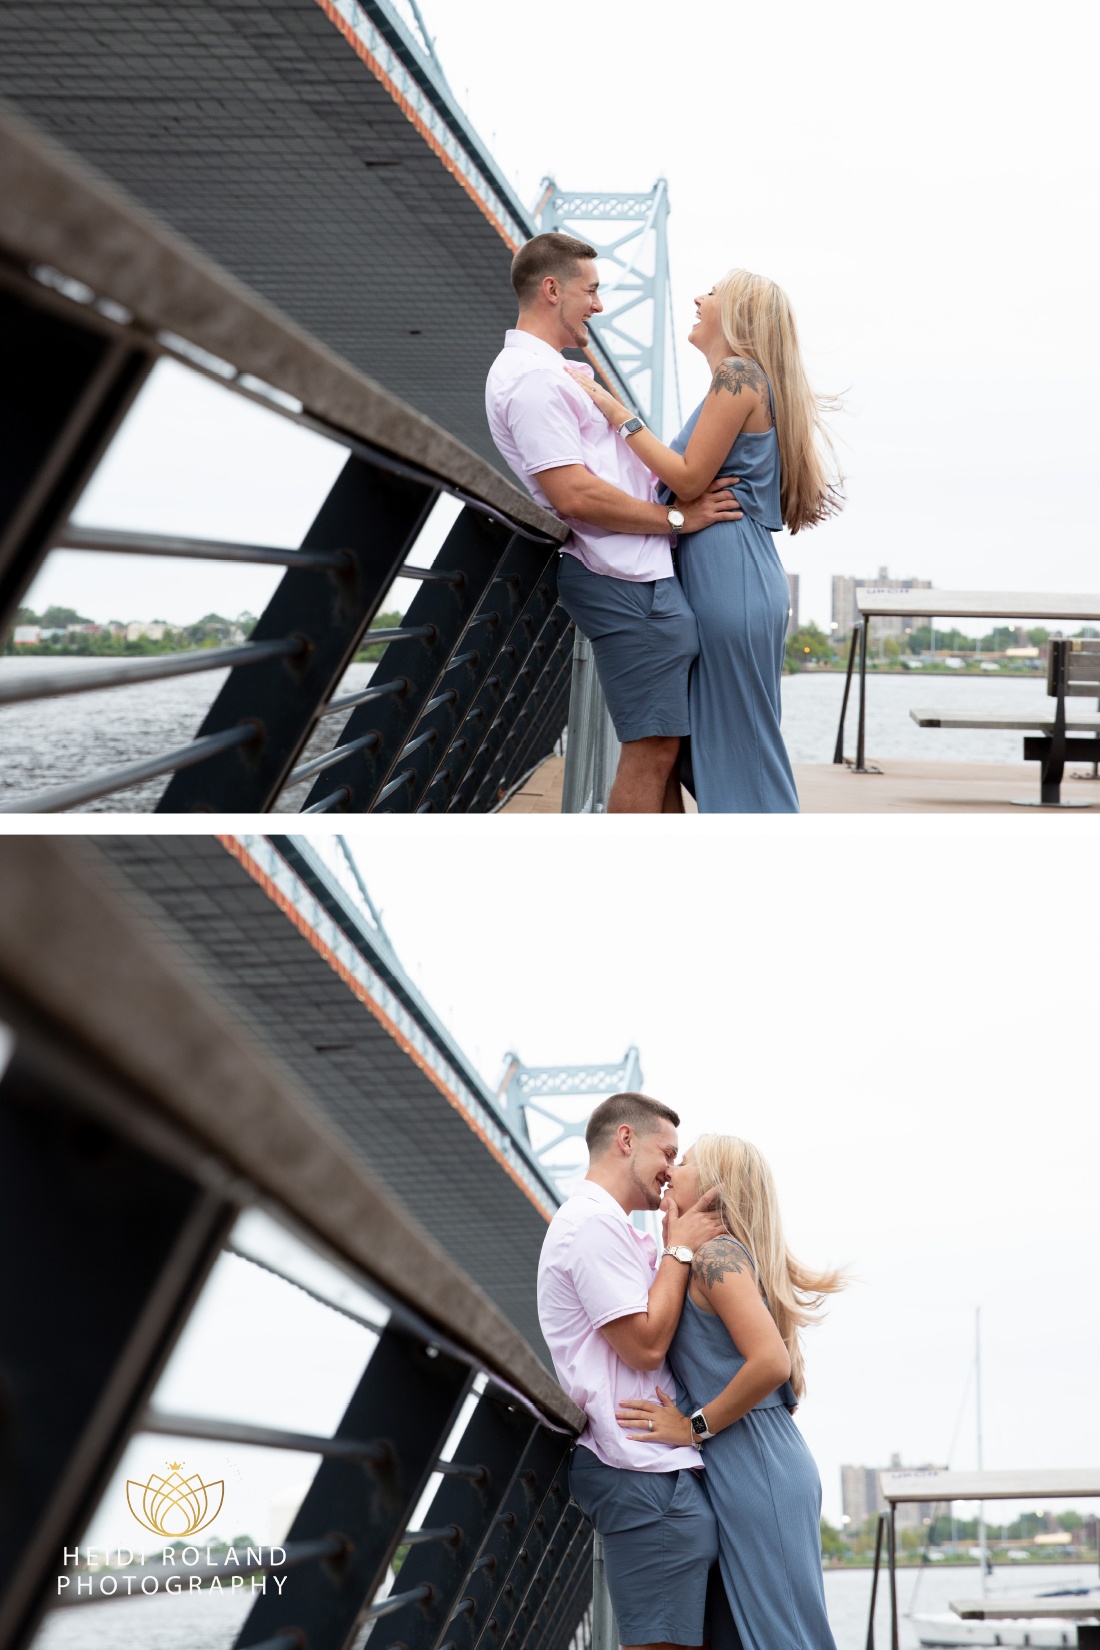 Newly engaged couple kissing near Ben Franklin Bridge in Philadelphia